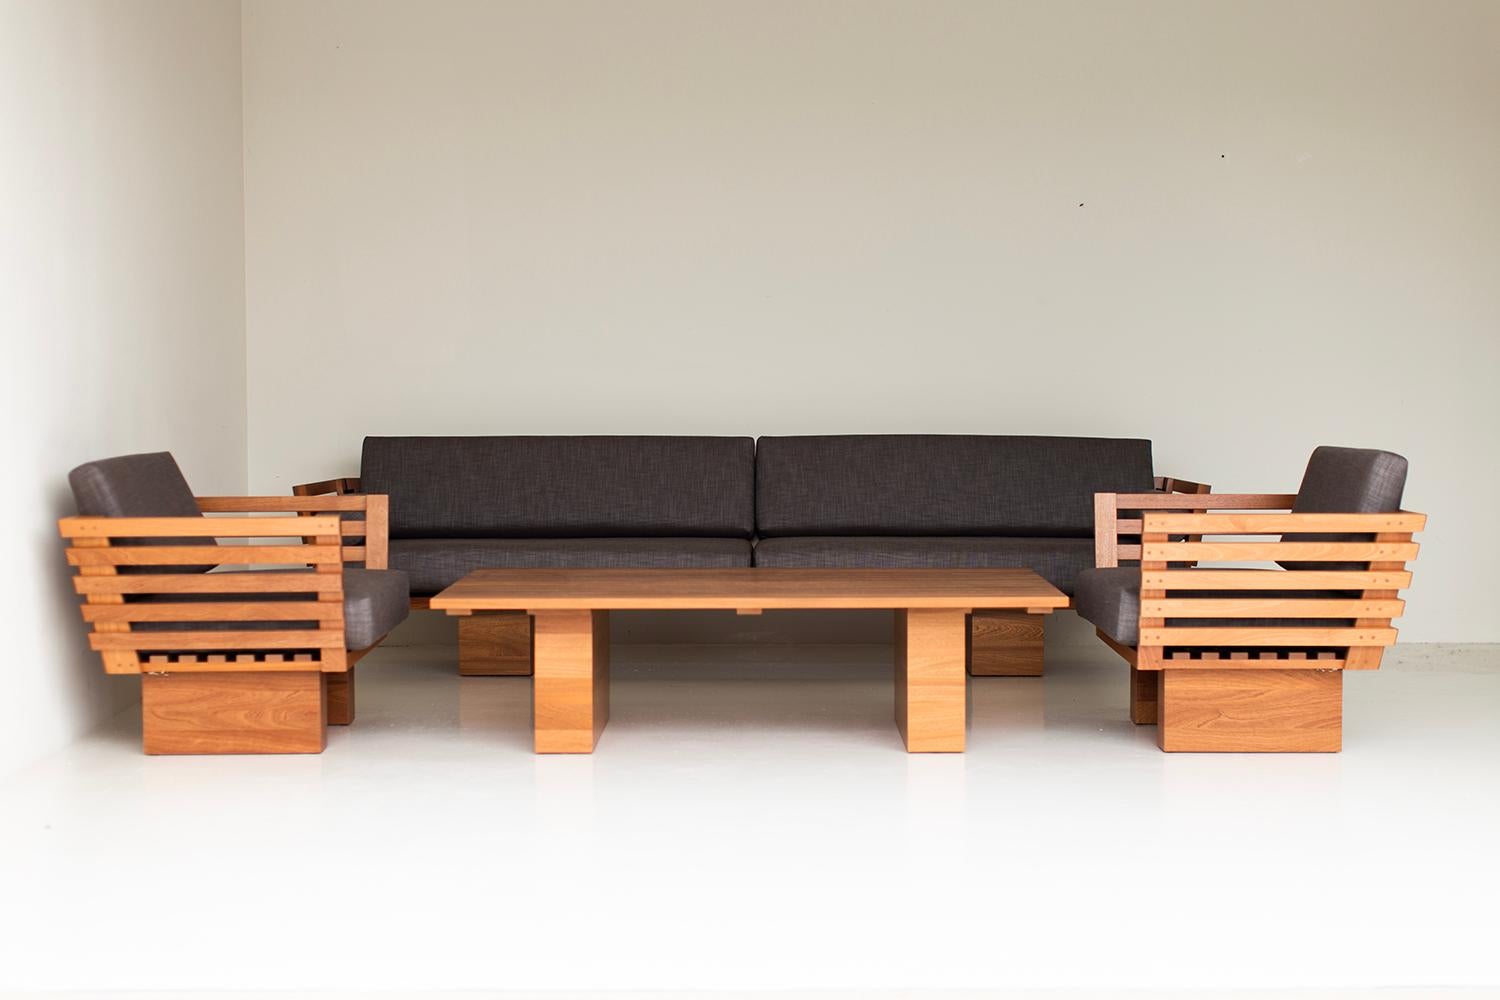 Modern Bertu Coffee Table, Outdoor Wood Coffee Table, Coffee Table, Suelo For Sale